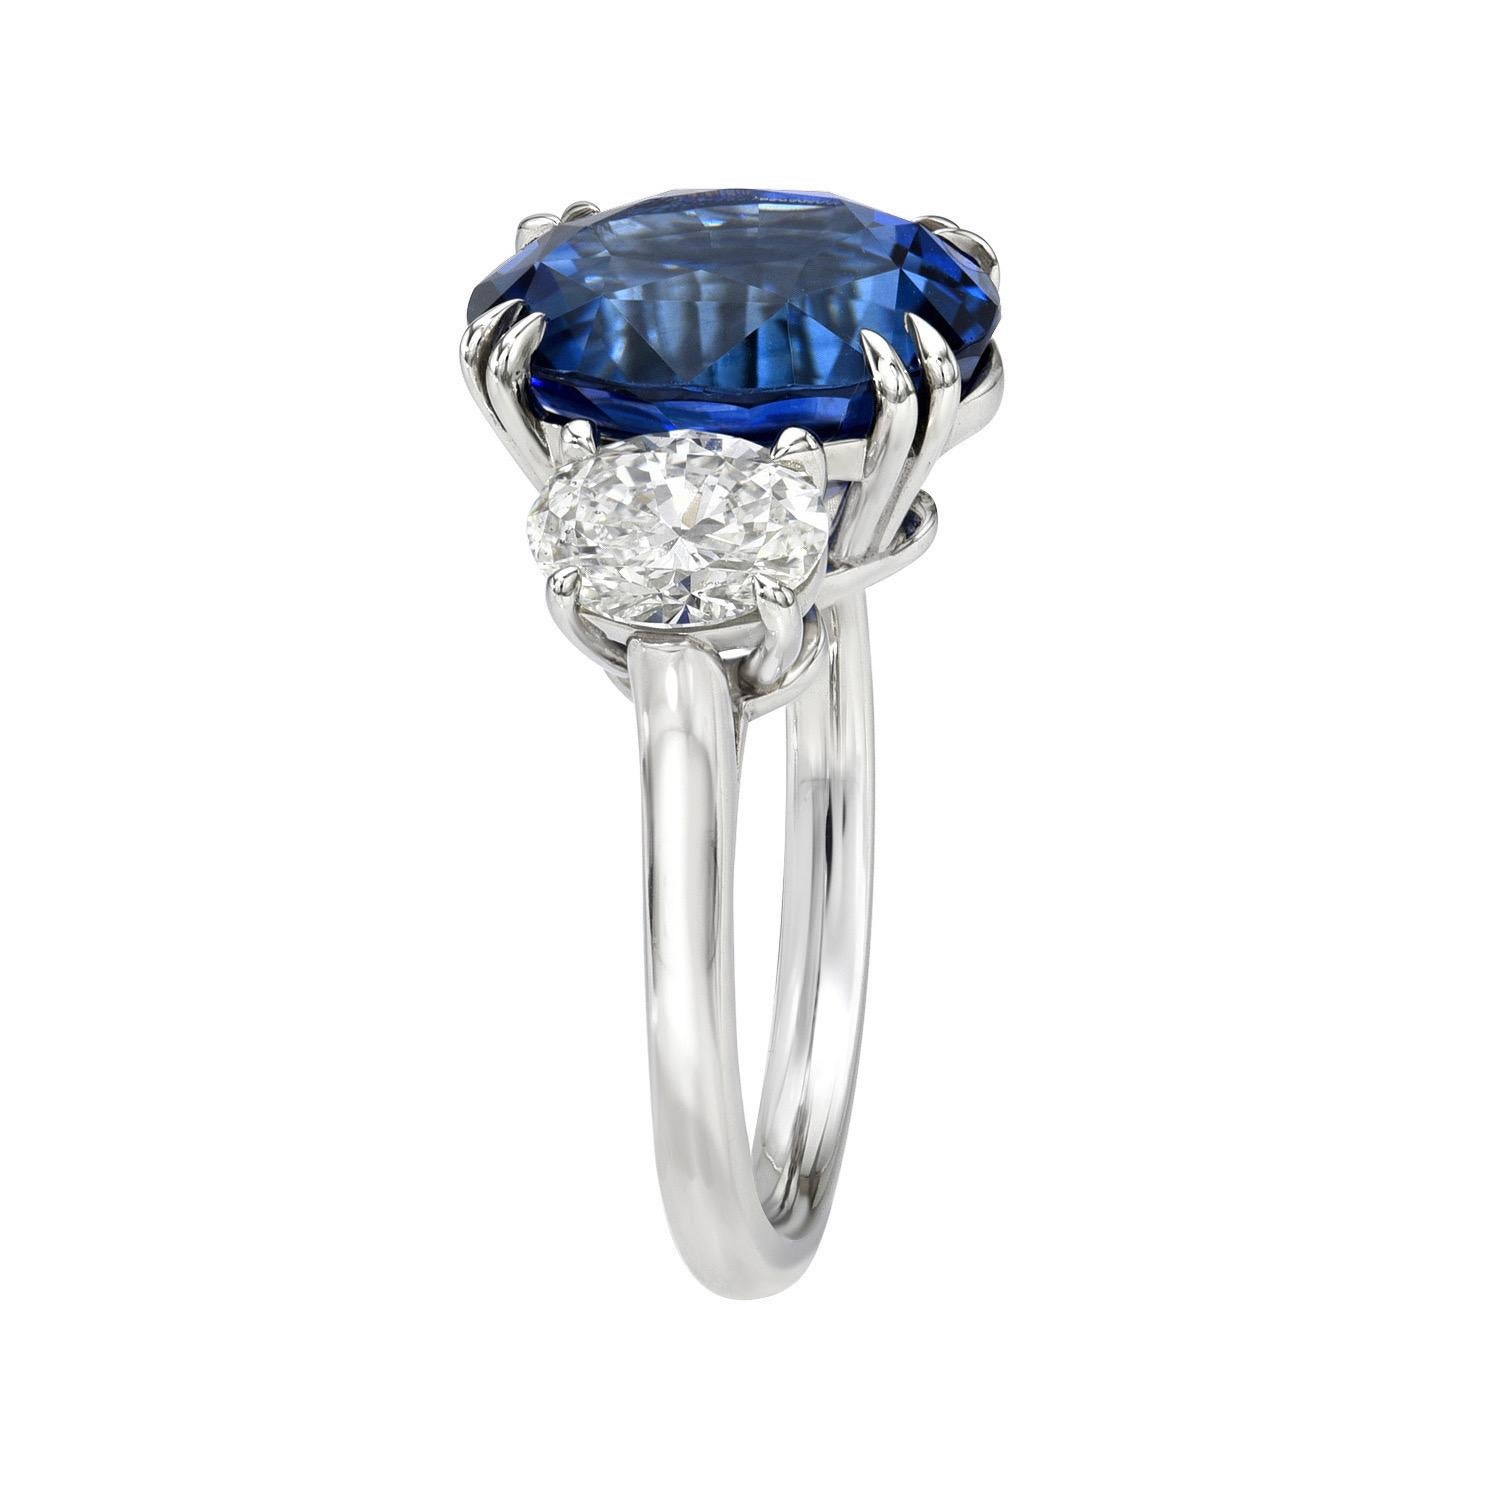 Impressive Royal Blue 7.03 carat 